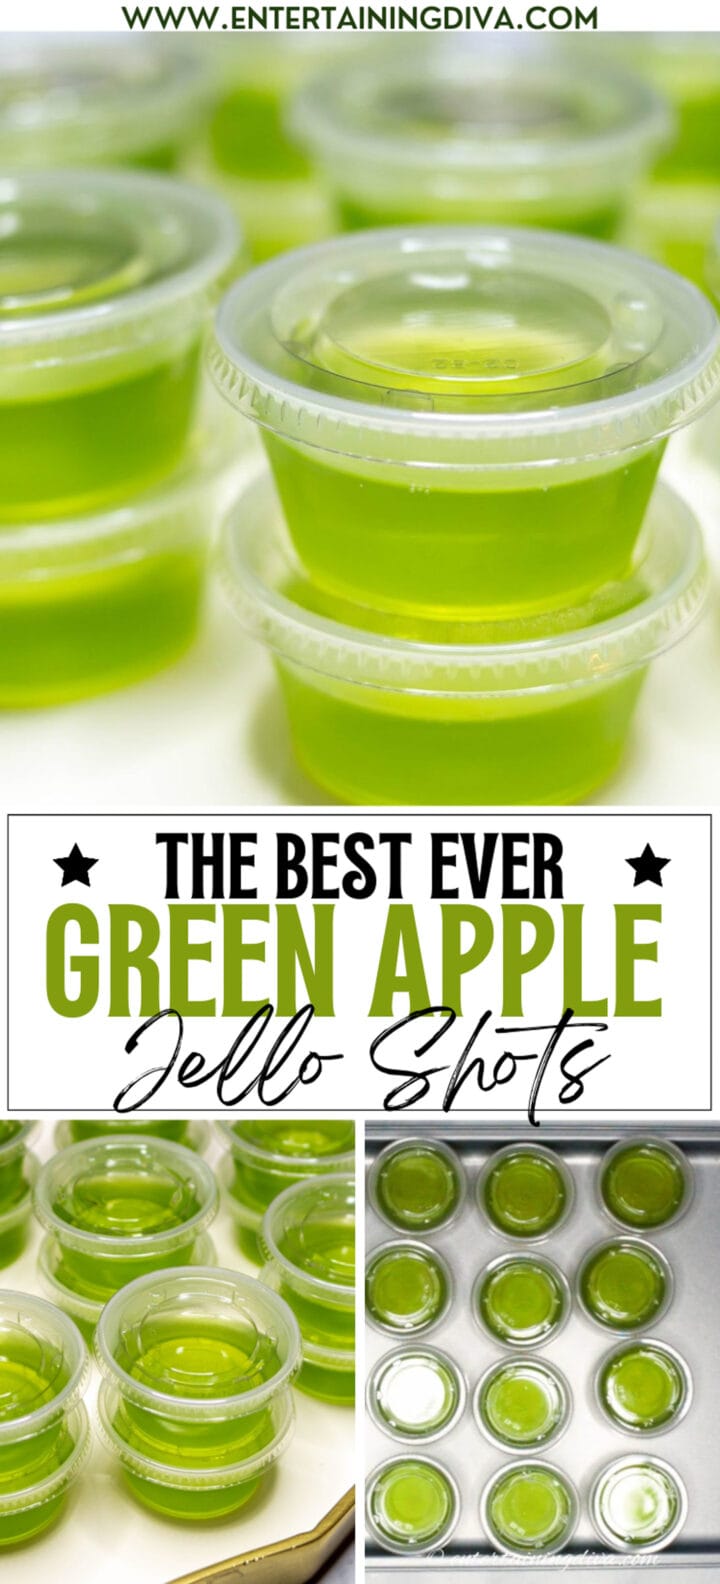 Green Apple Cinnamon Fireball Jello Shots